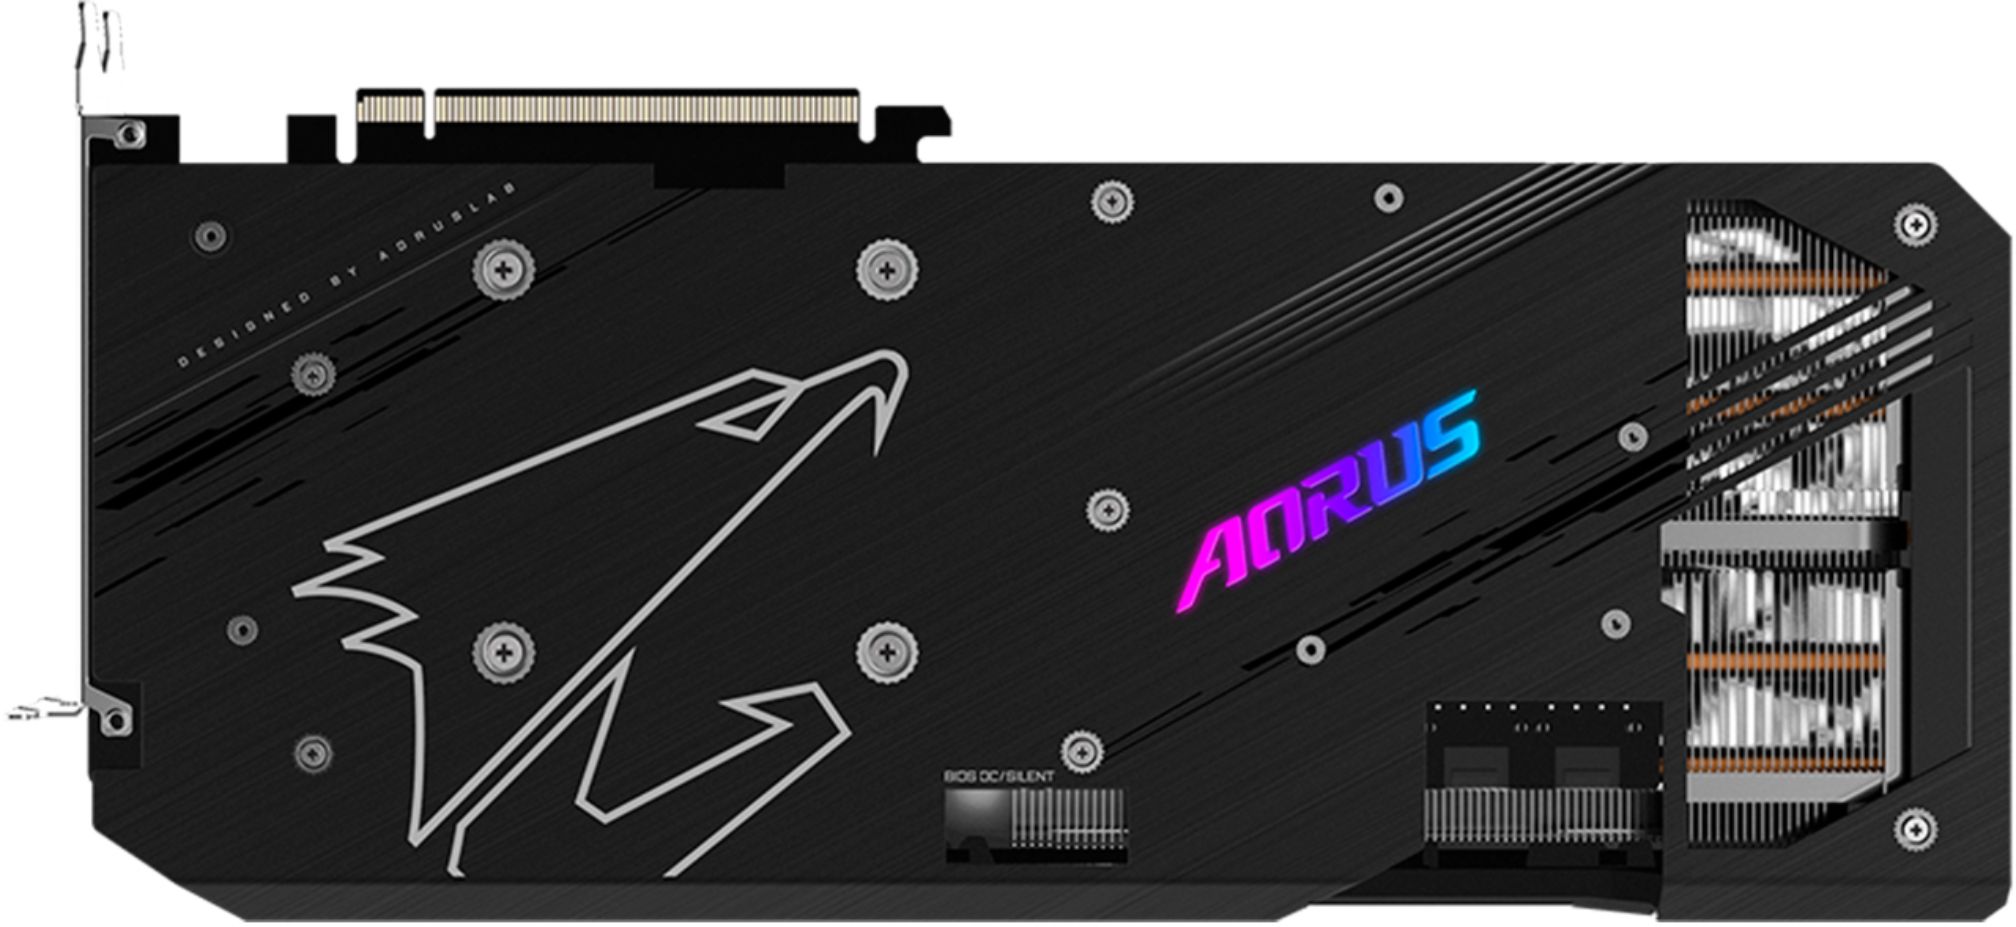 AORUS Radeon™ RX 6800 XT MASTER TYPE C 16G Key Features